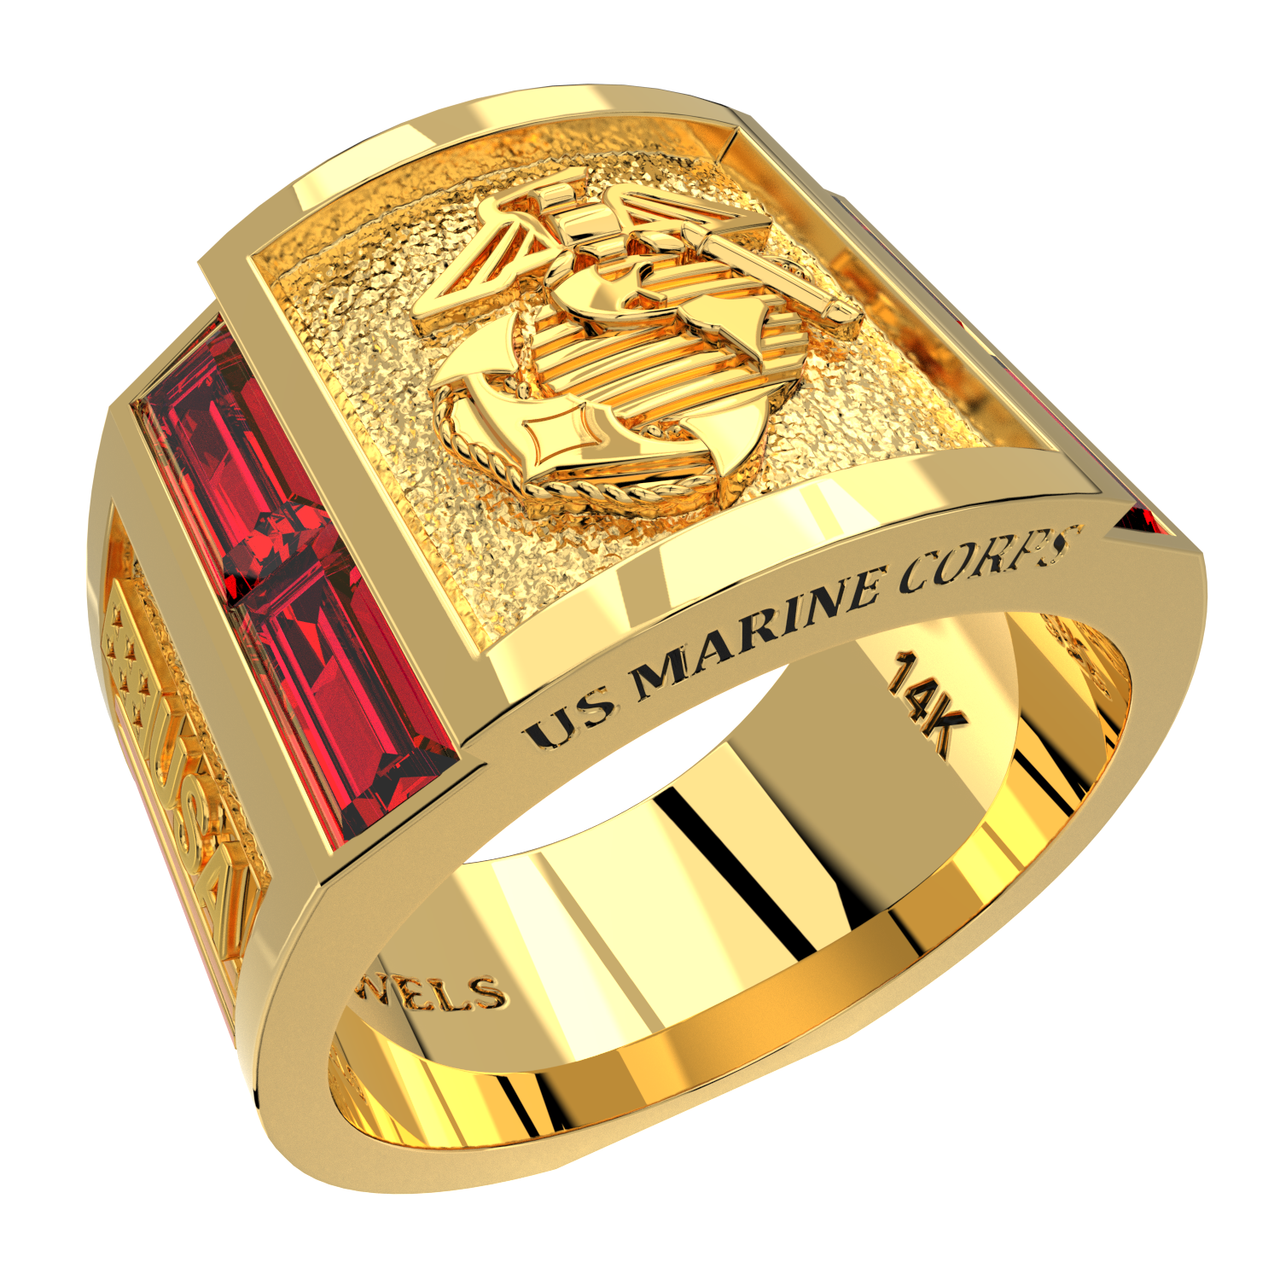 Men's Heavy 10k or 14k Yellow or White Gold US Marine Corps USMC Ring Band w/ Gemstones